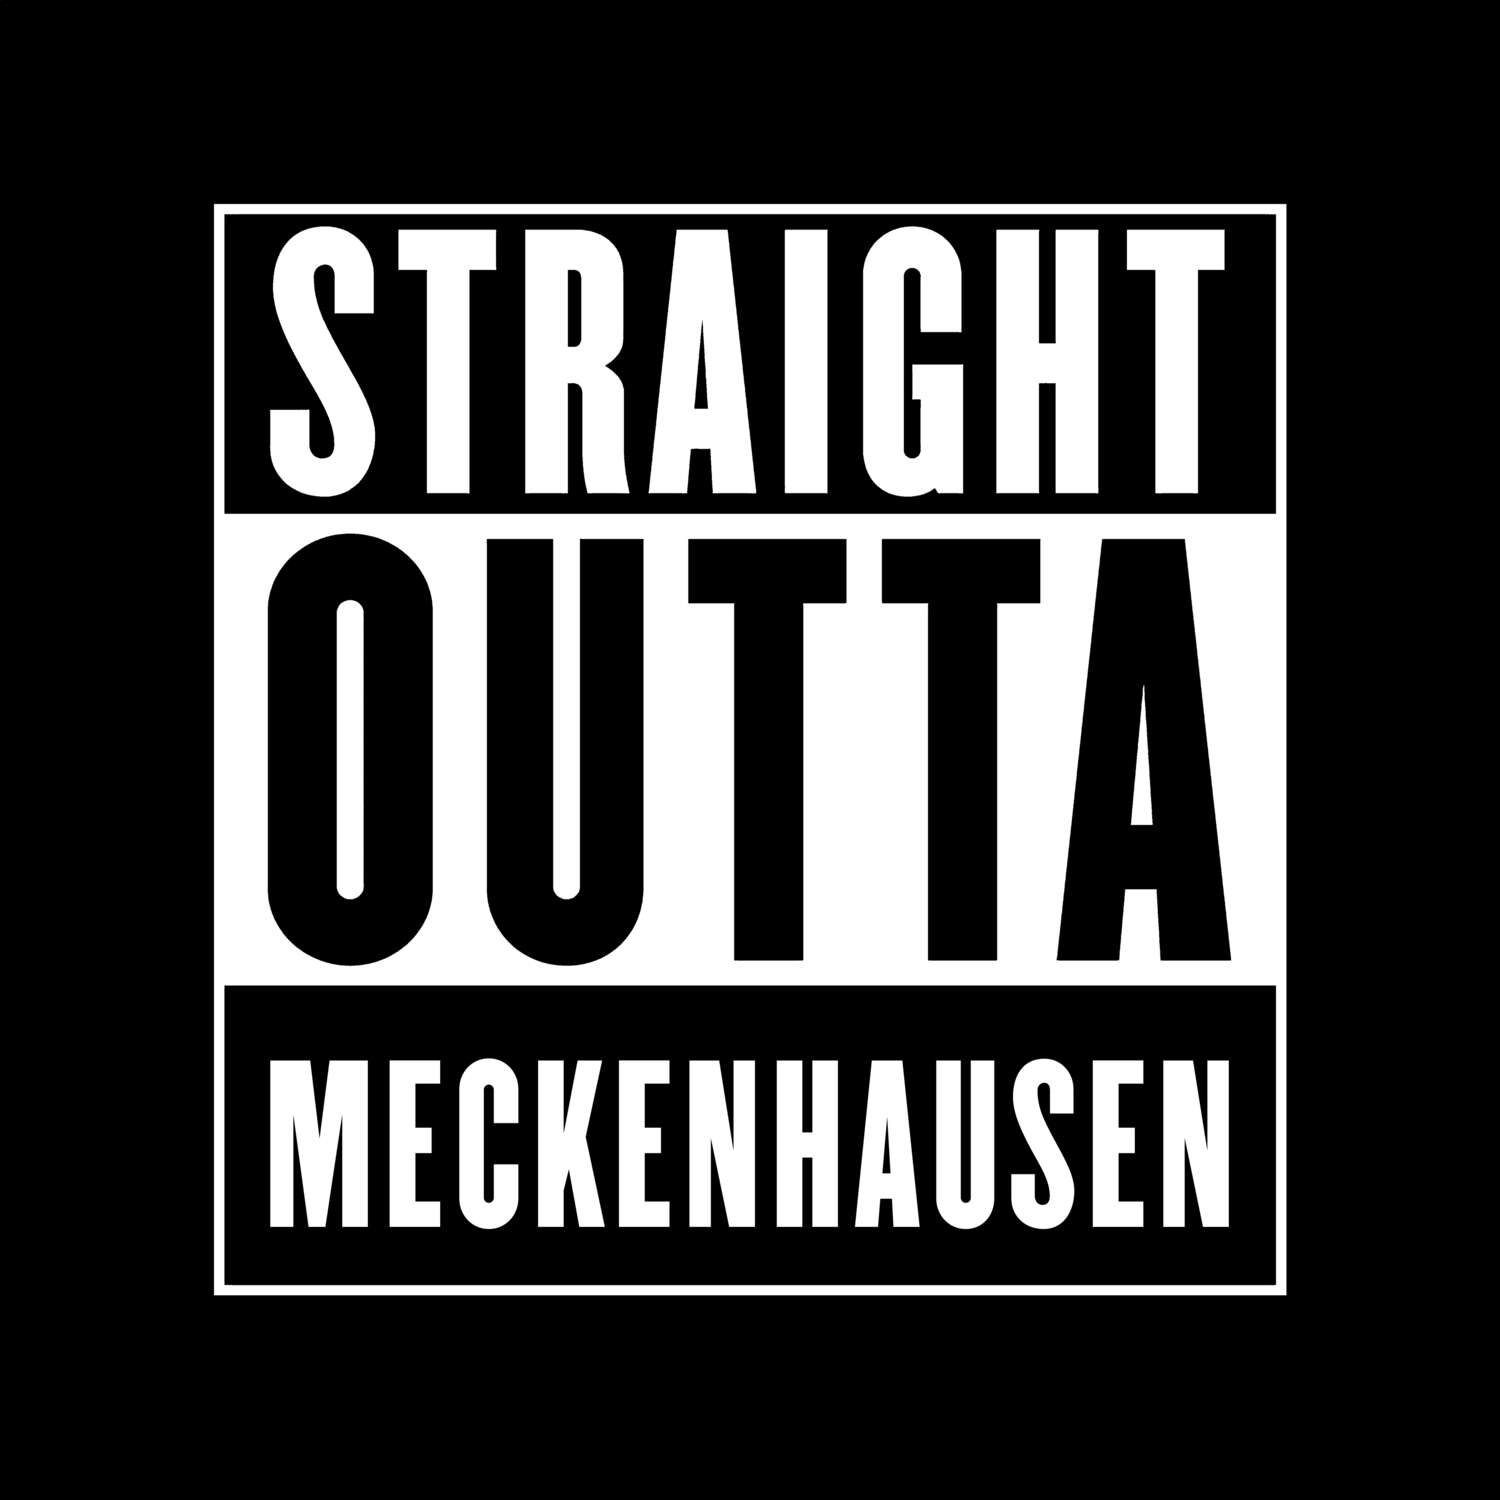 Meckenhausen T-Shirt »Straight Outta«